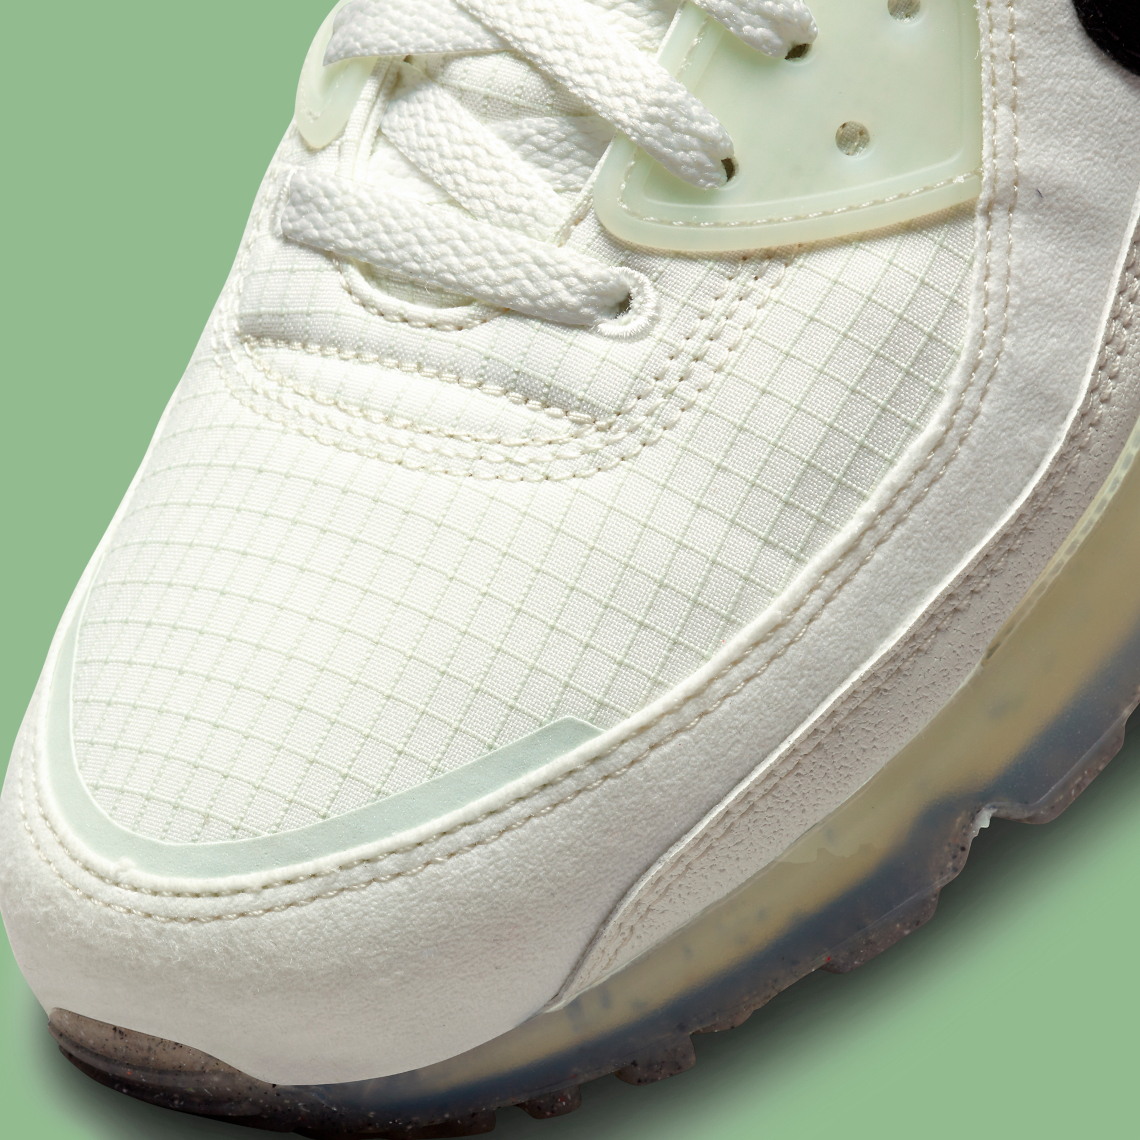 nike air cushion shoes clearance sale for women 90 Terrascape Dh2973 100 9